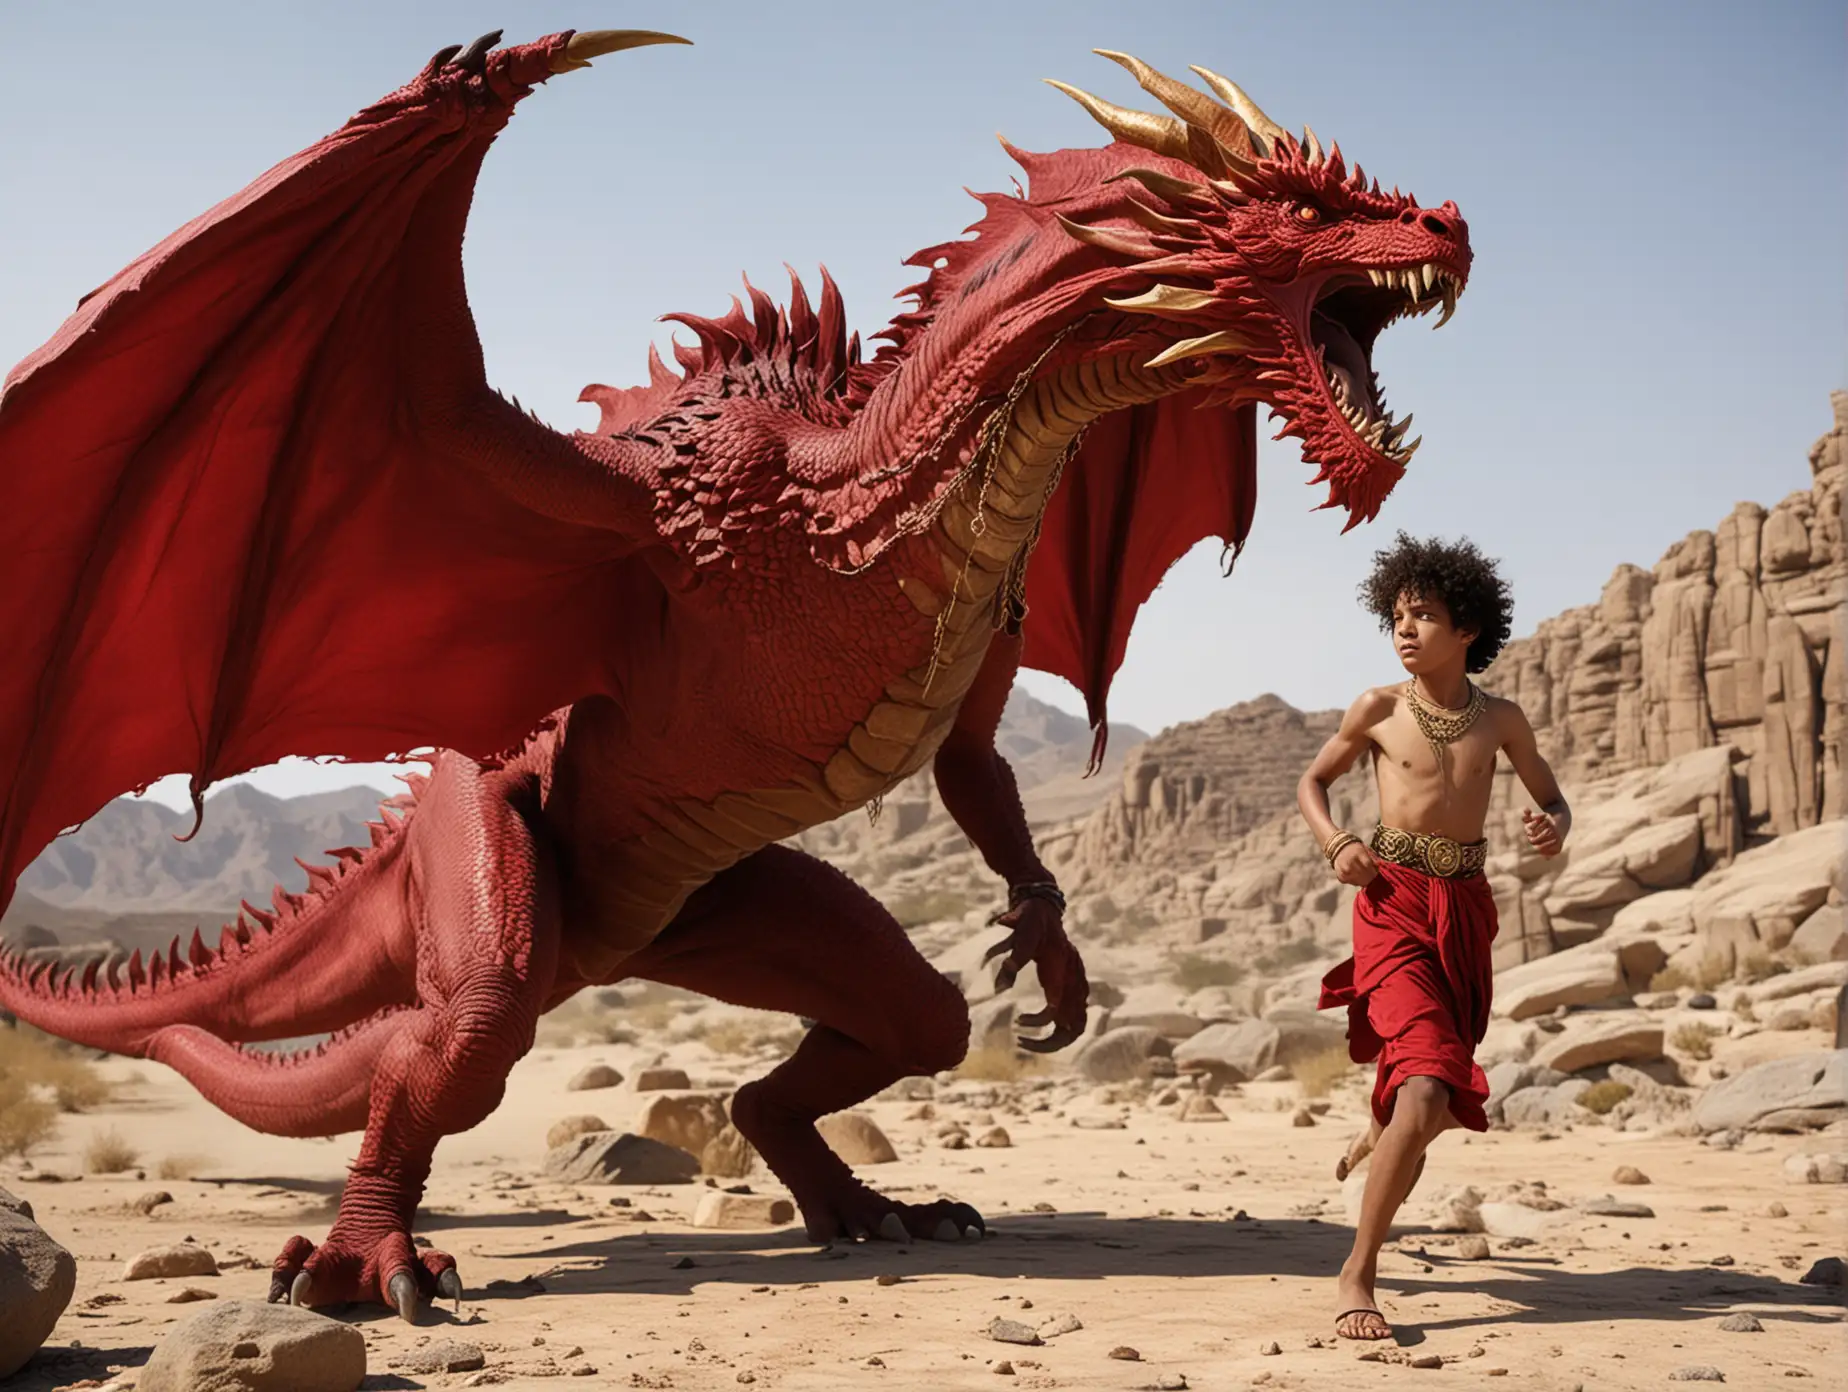 Courageous-Teenage-Warrior-Battling-Enormous-Red-Dragon-in-Arid-Desert